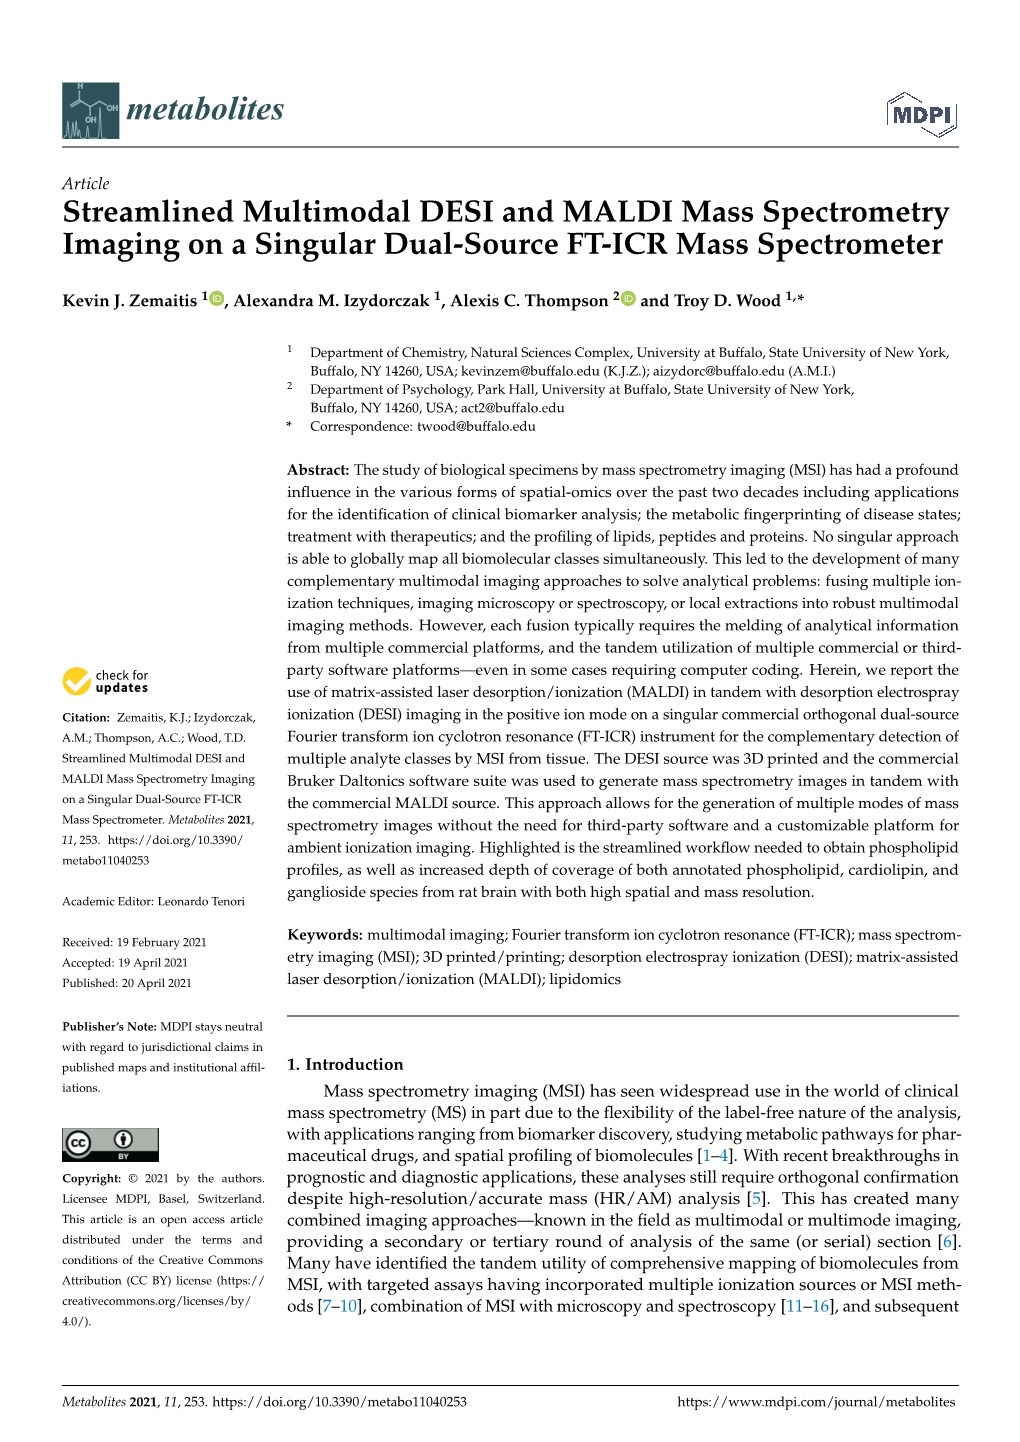 Streamlined Multimodal DESI and MALDI Mass Spectrometry Imaging on a Singular Dual-Source FT-ICR Mass Spectrometer